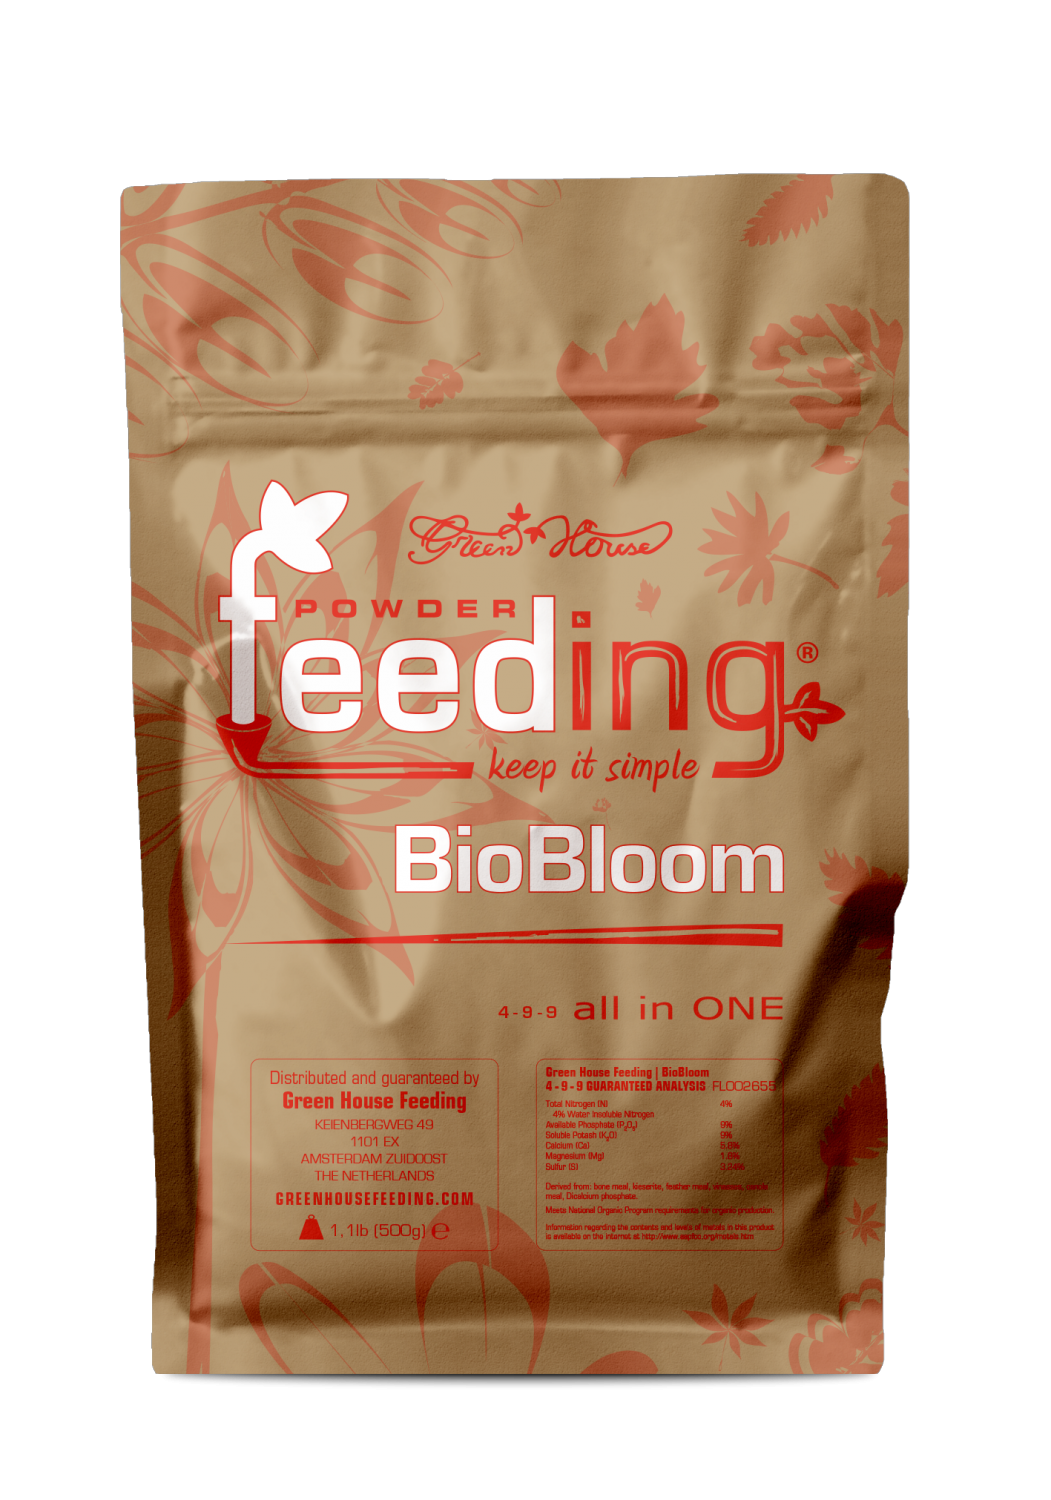 BioBloom by Green House Feeding